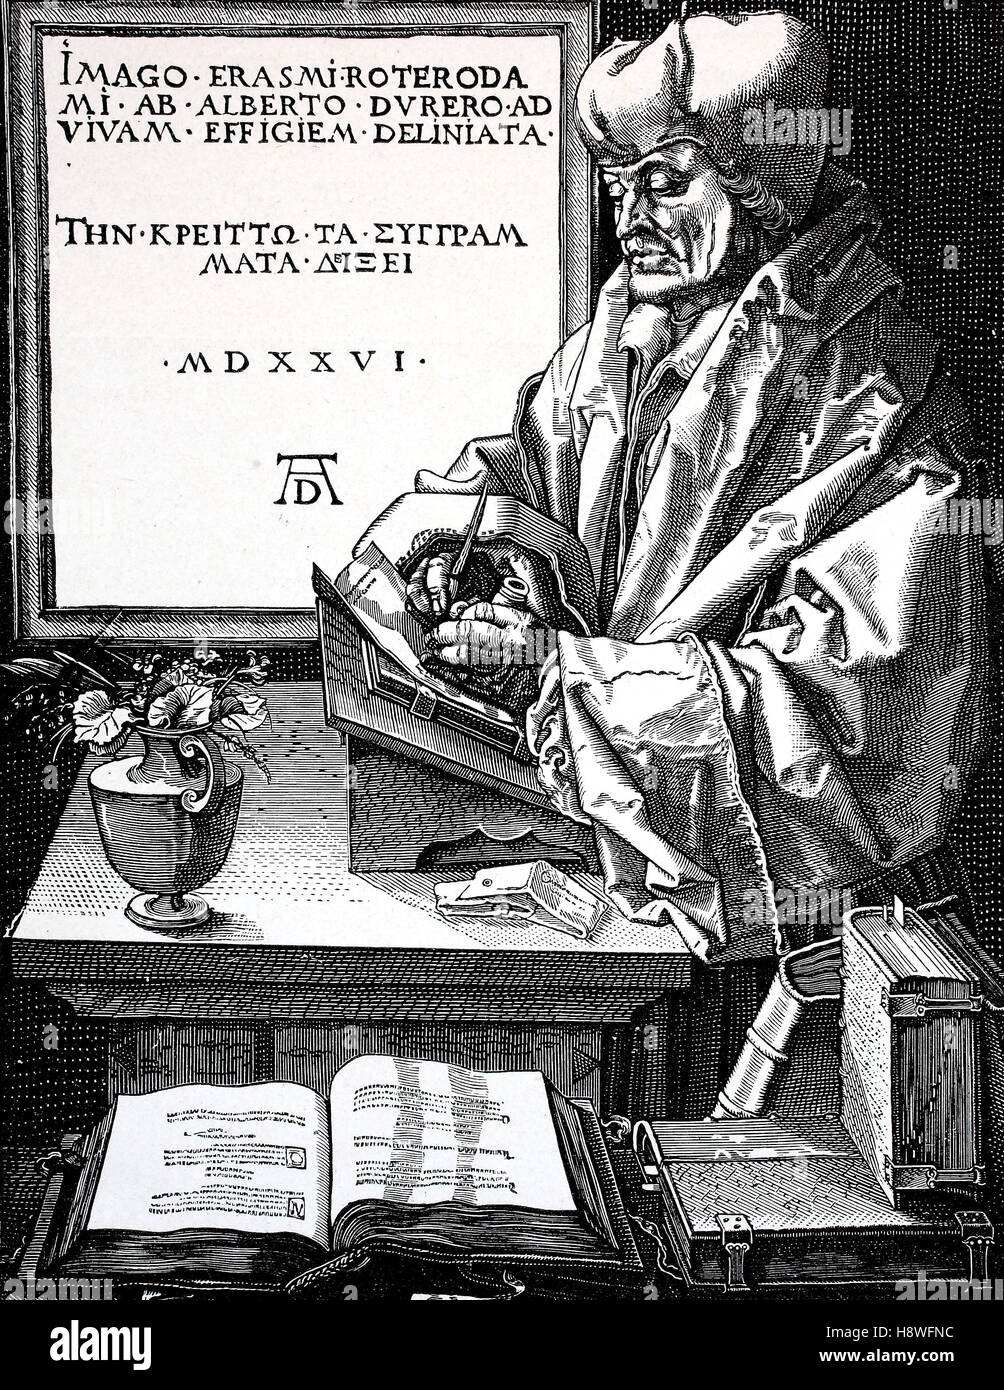 Desiderius Erasmus Roterodamus, known as Erasmus or Erasmus of Rotterdam,[note 1] was a Dutch Renaissance humanist, Catholic priest, social critic, teacher, and theologian. Stock Photo